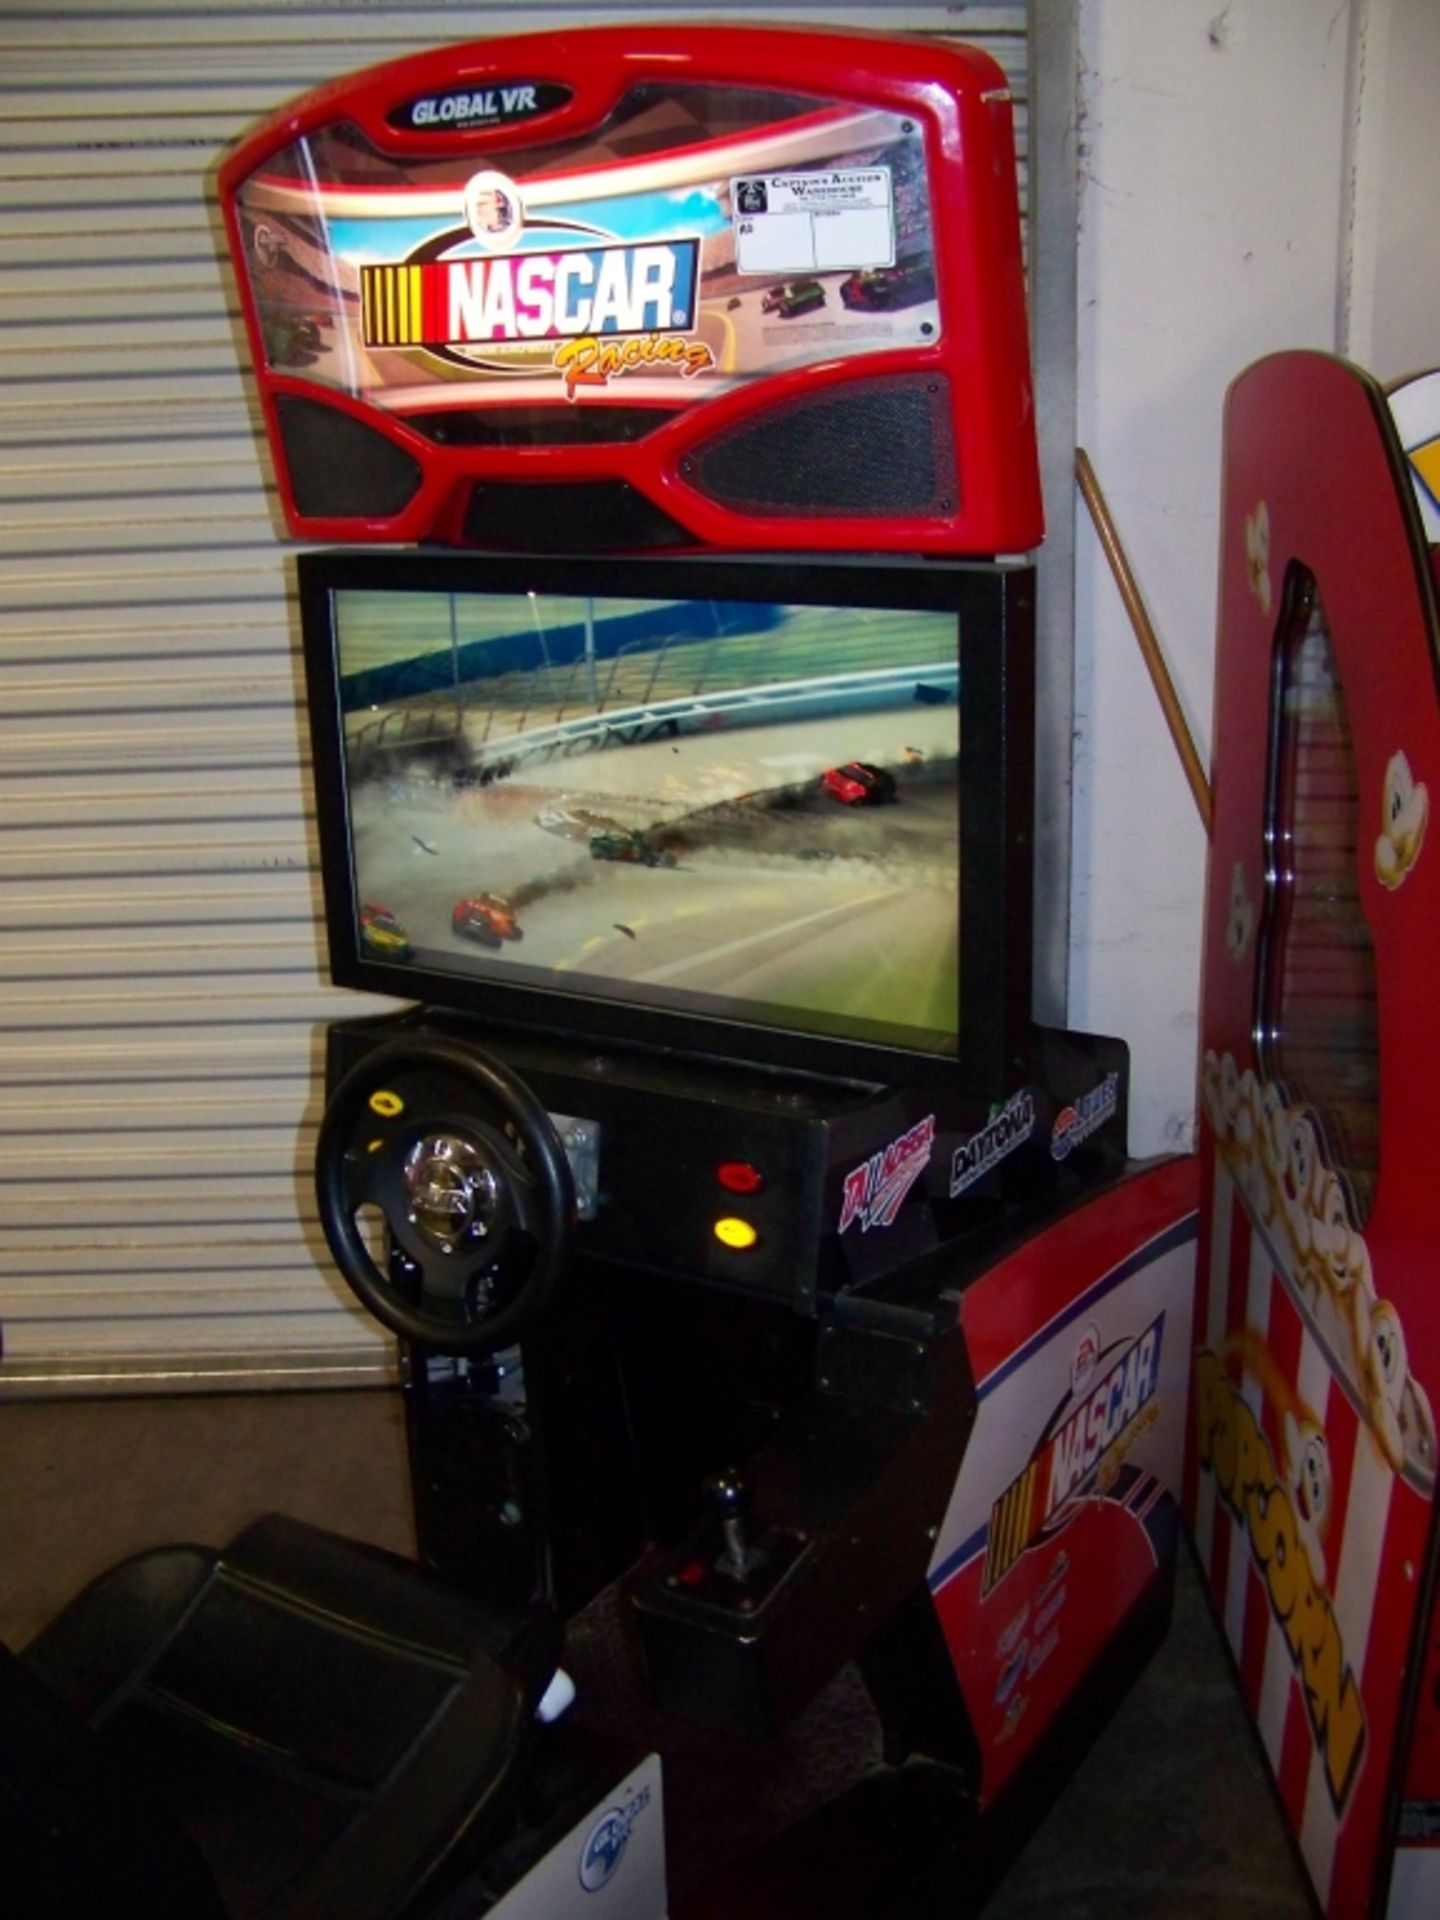 NASCAR RACING ARCADE GAME GLOBAL VR 32" LCD - Image 4 of 7